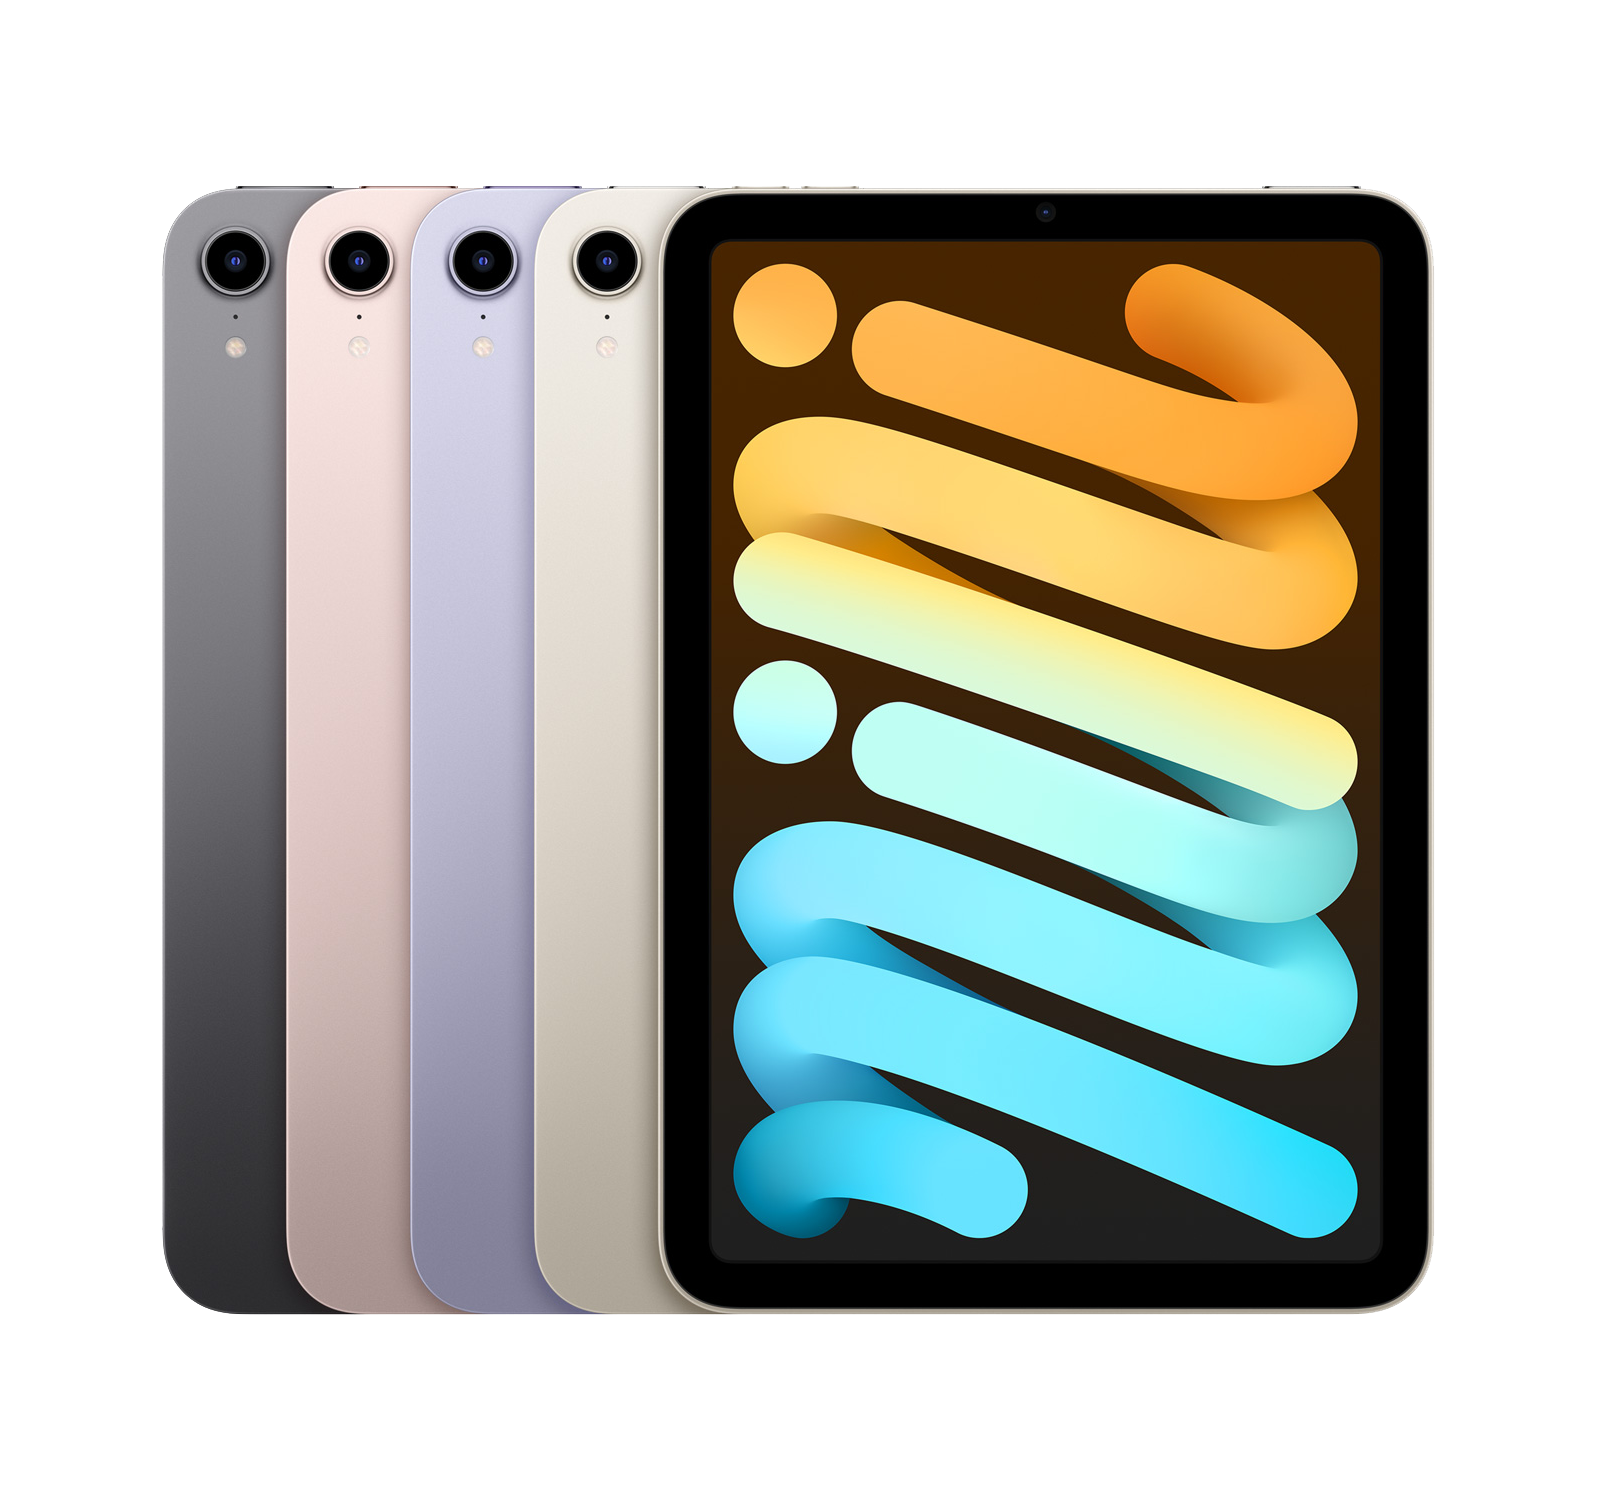 iPad mini 6 in four colors